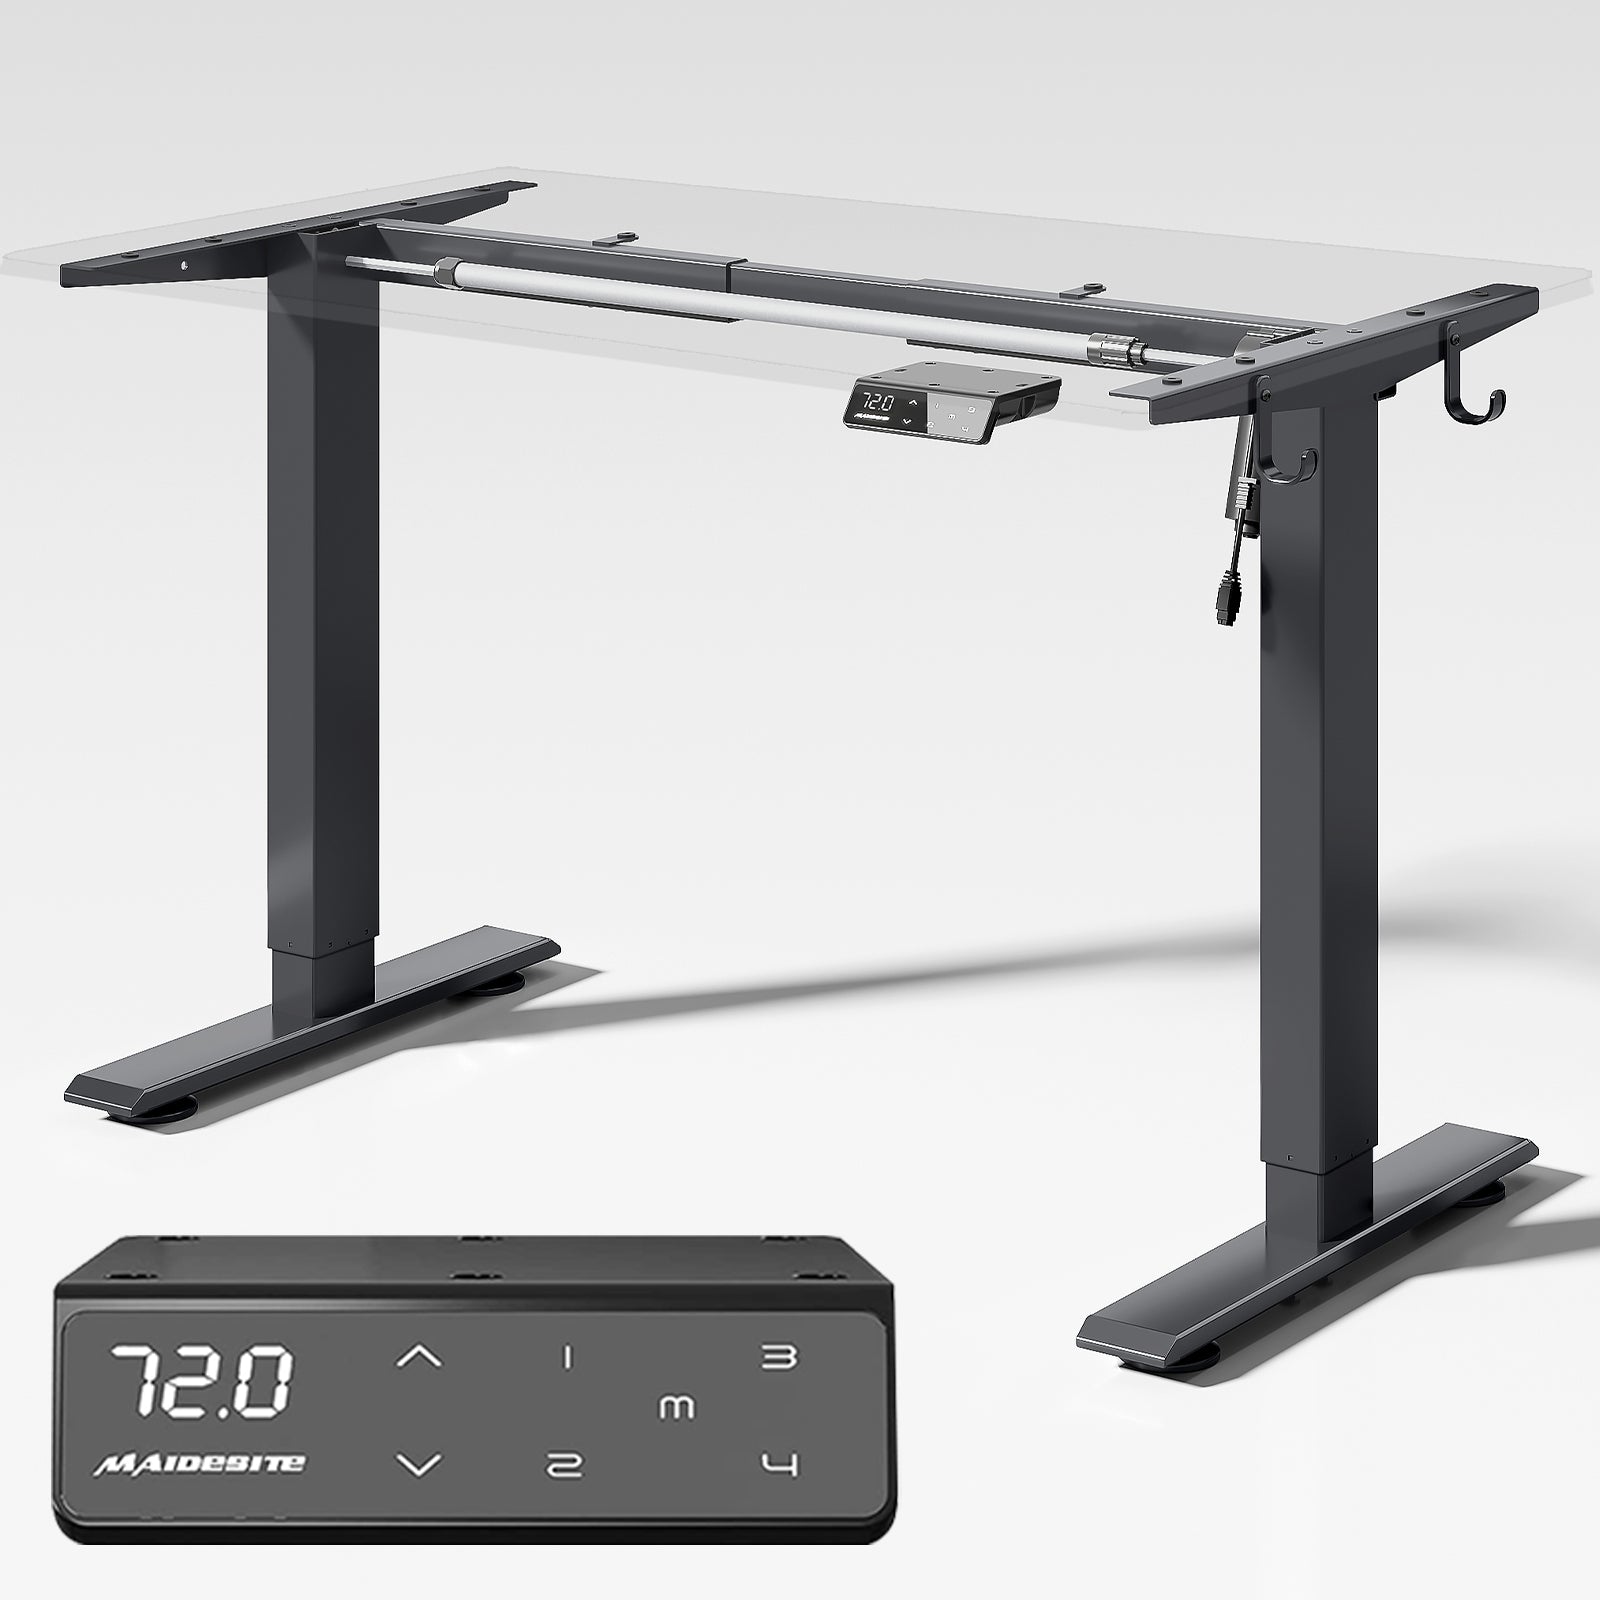 Maidesite T1 Basic - Electric Standing Desk Black Frame sit stand desk leg